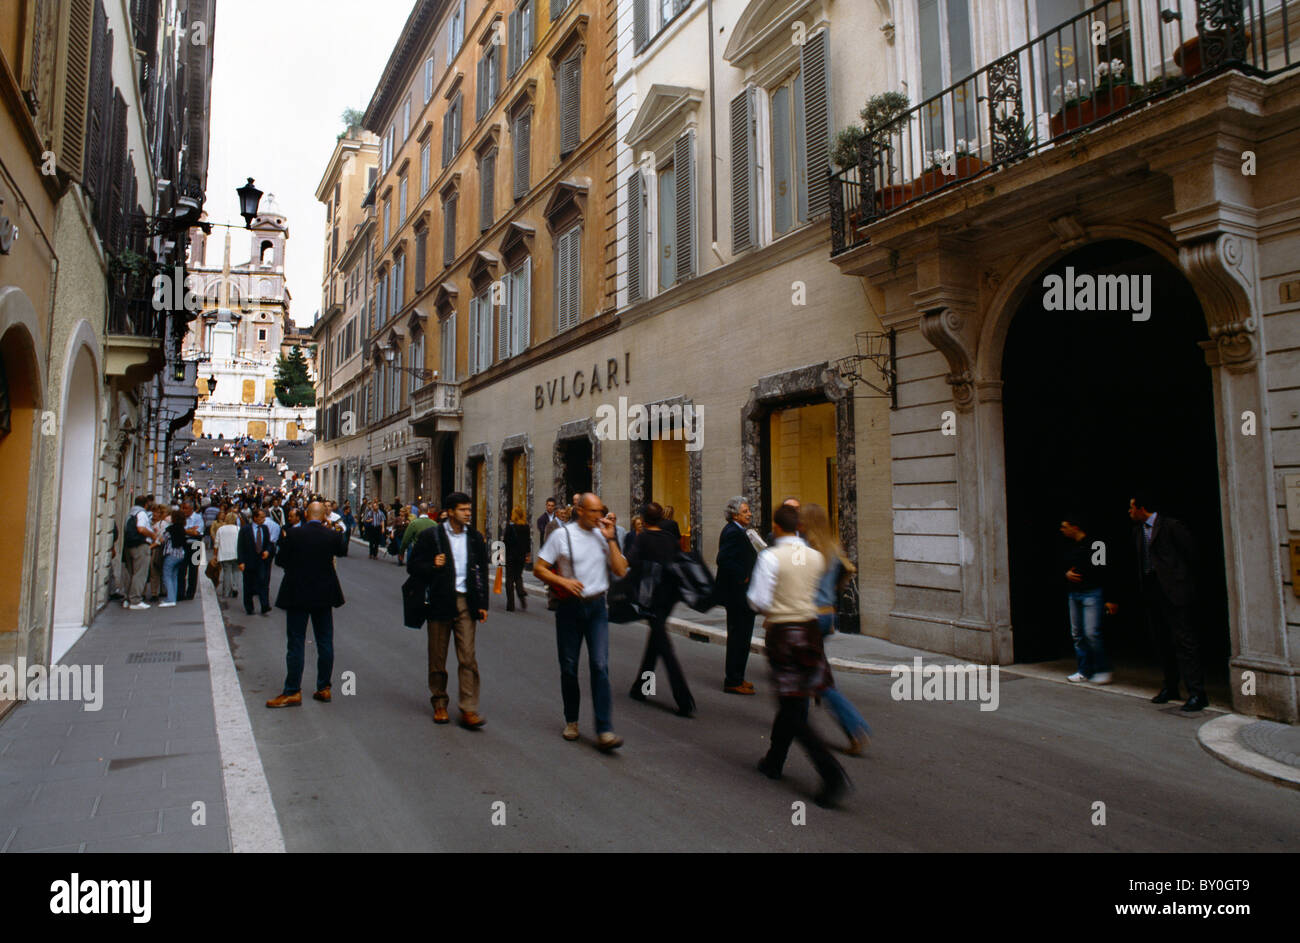 Louis Vuitton shop along Via dei Condotti street Tridente district Rome  Italy Europe Stock Photo - Alamy